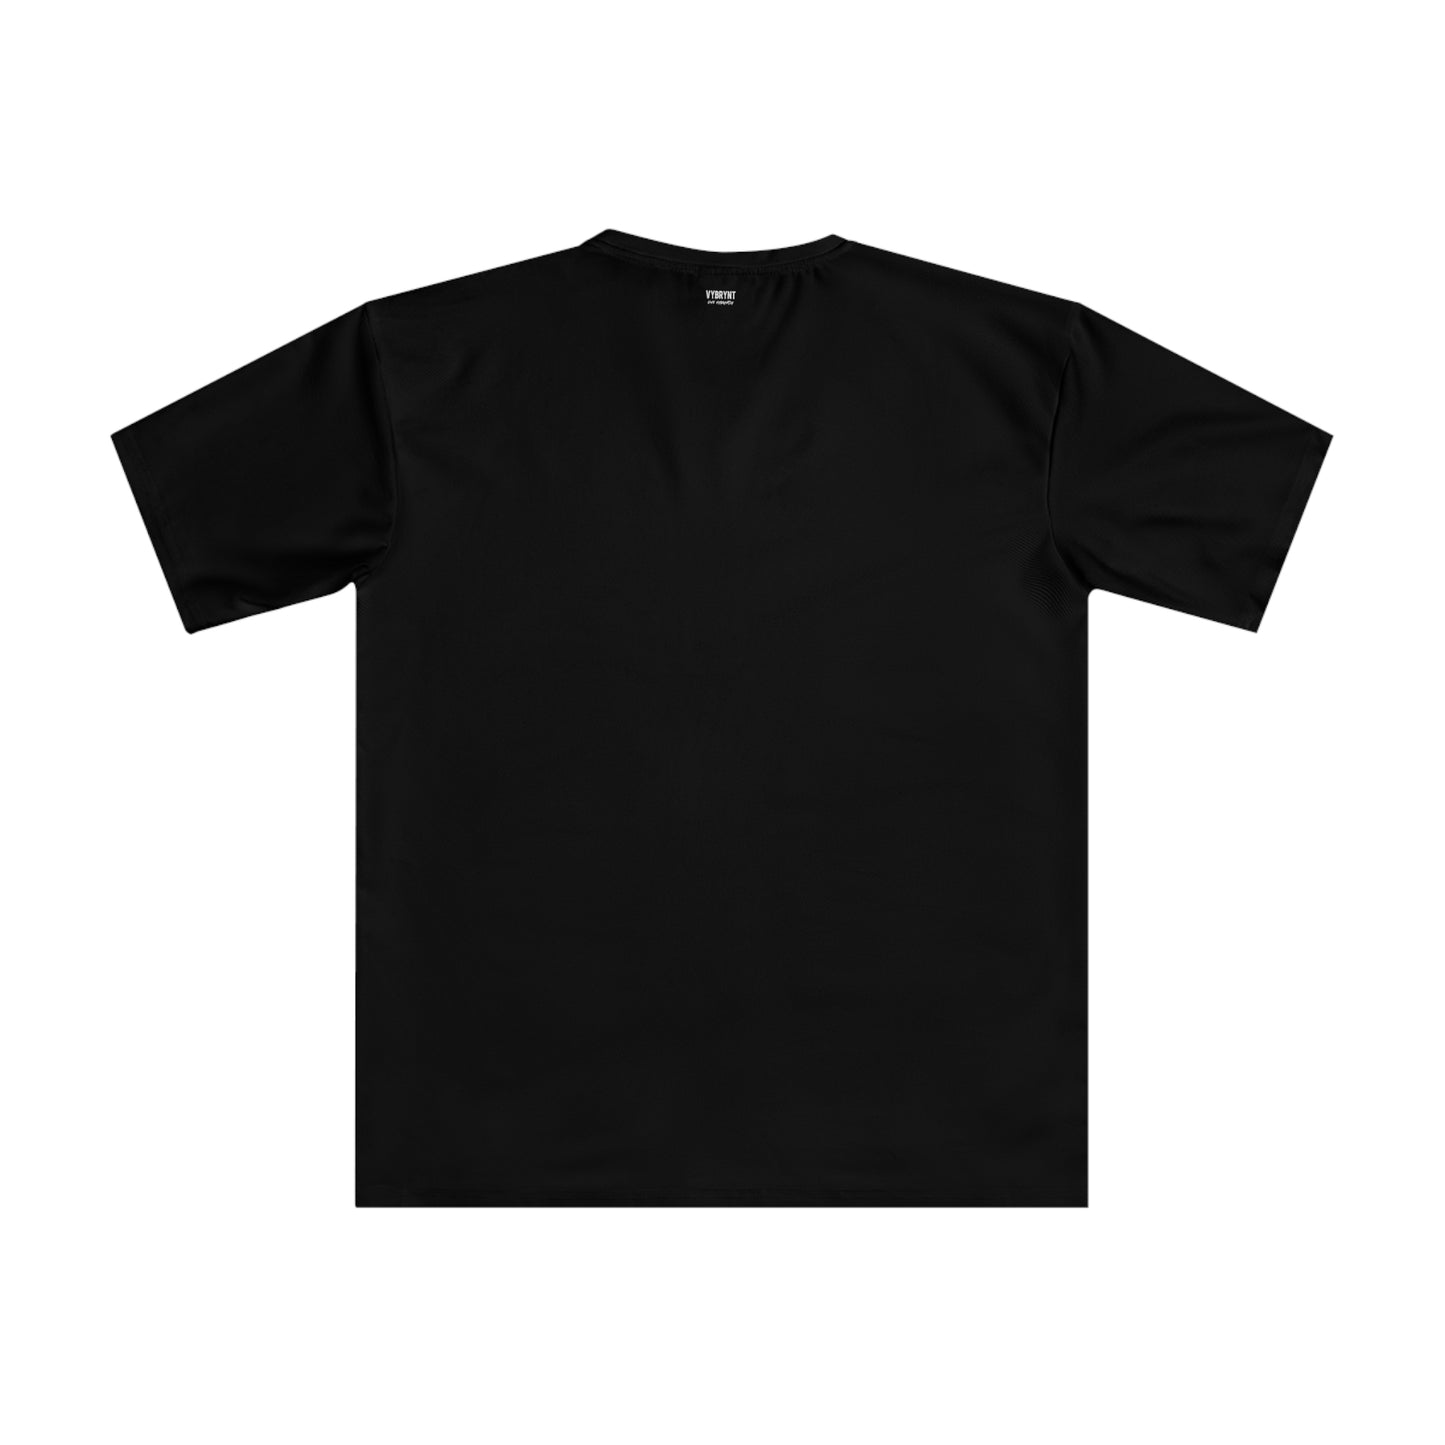 Abstract Metro Men's Black T-shirt